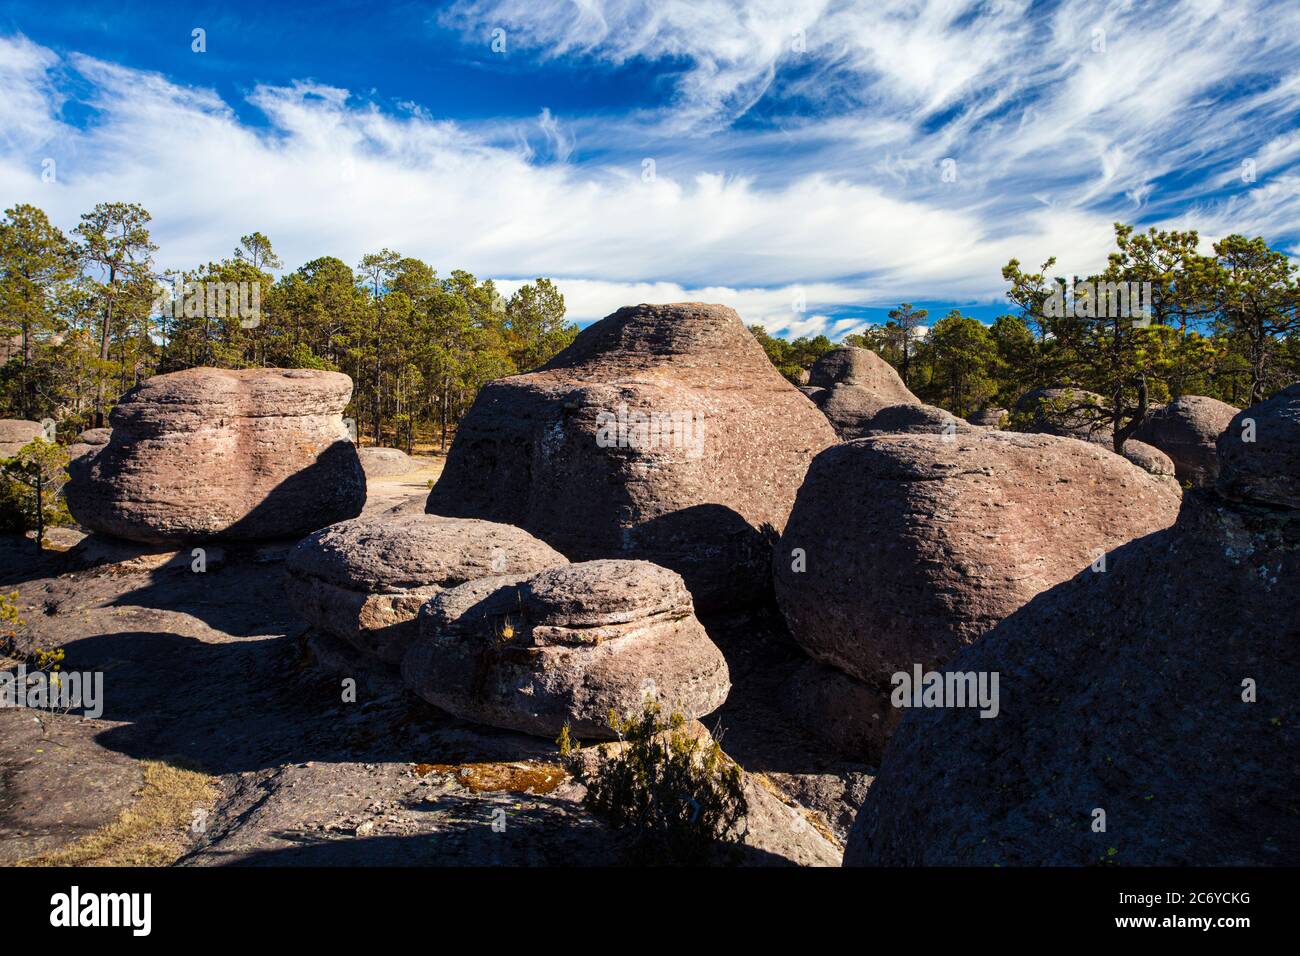 Unique rock formations of Mexiquillo, Durango, Mexico. Stock Photo